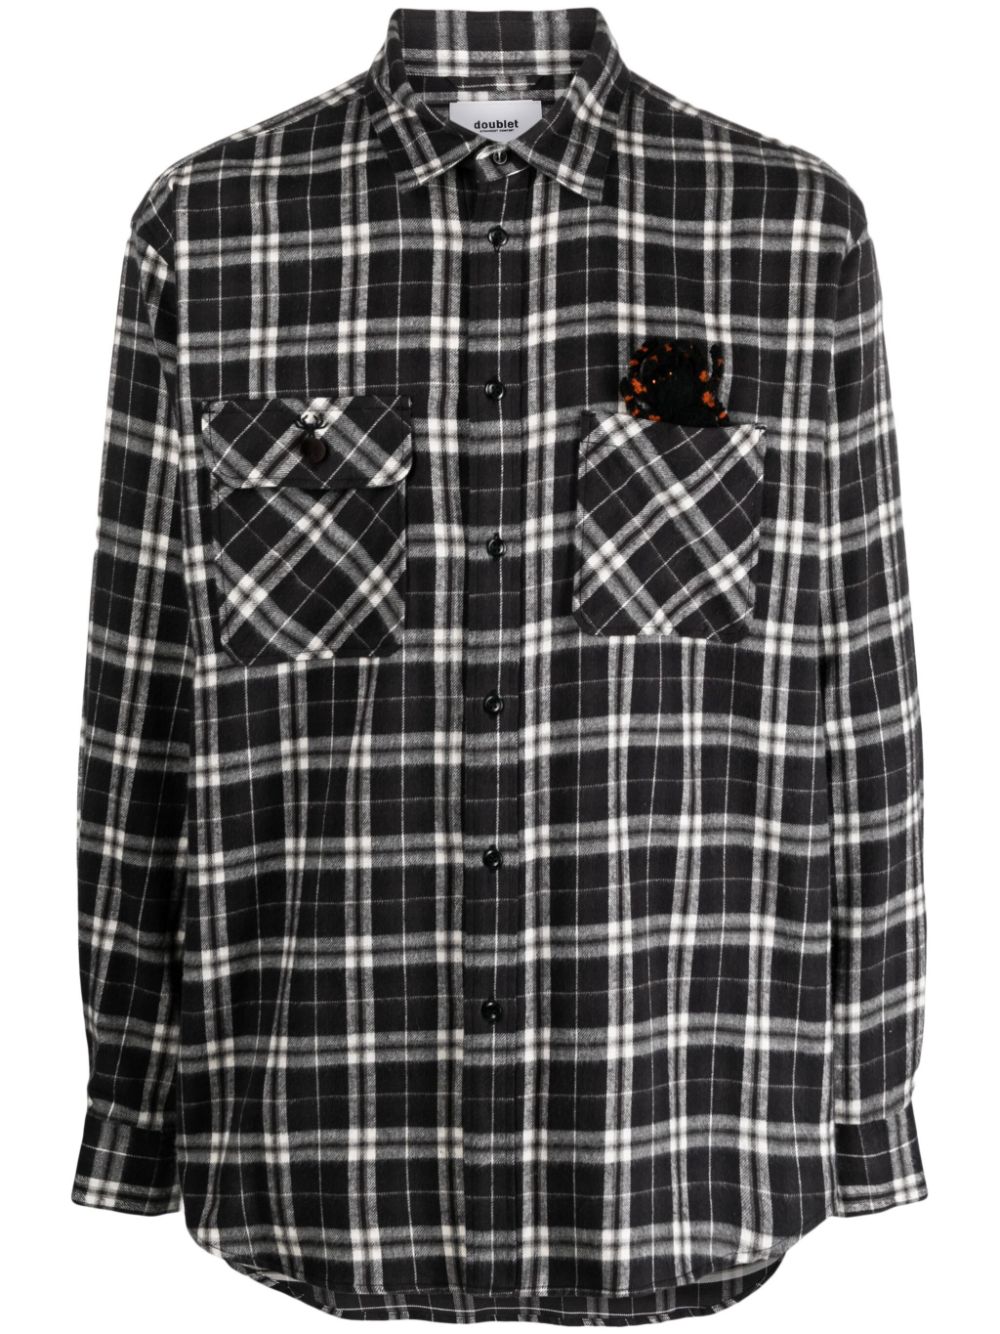 Doublet check-pattern cotton shirt - Black von Doublet